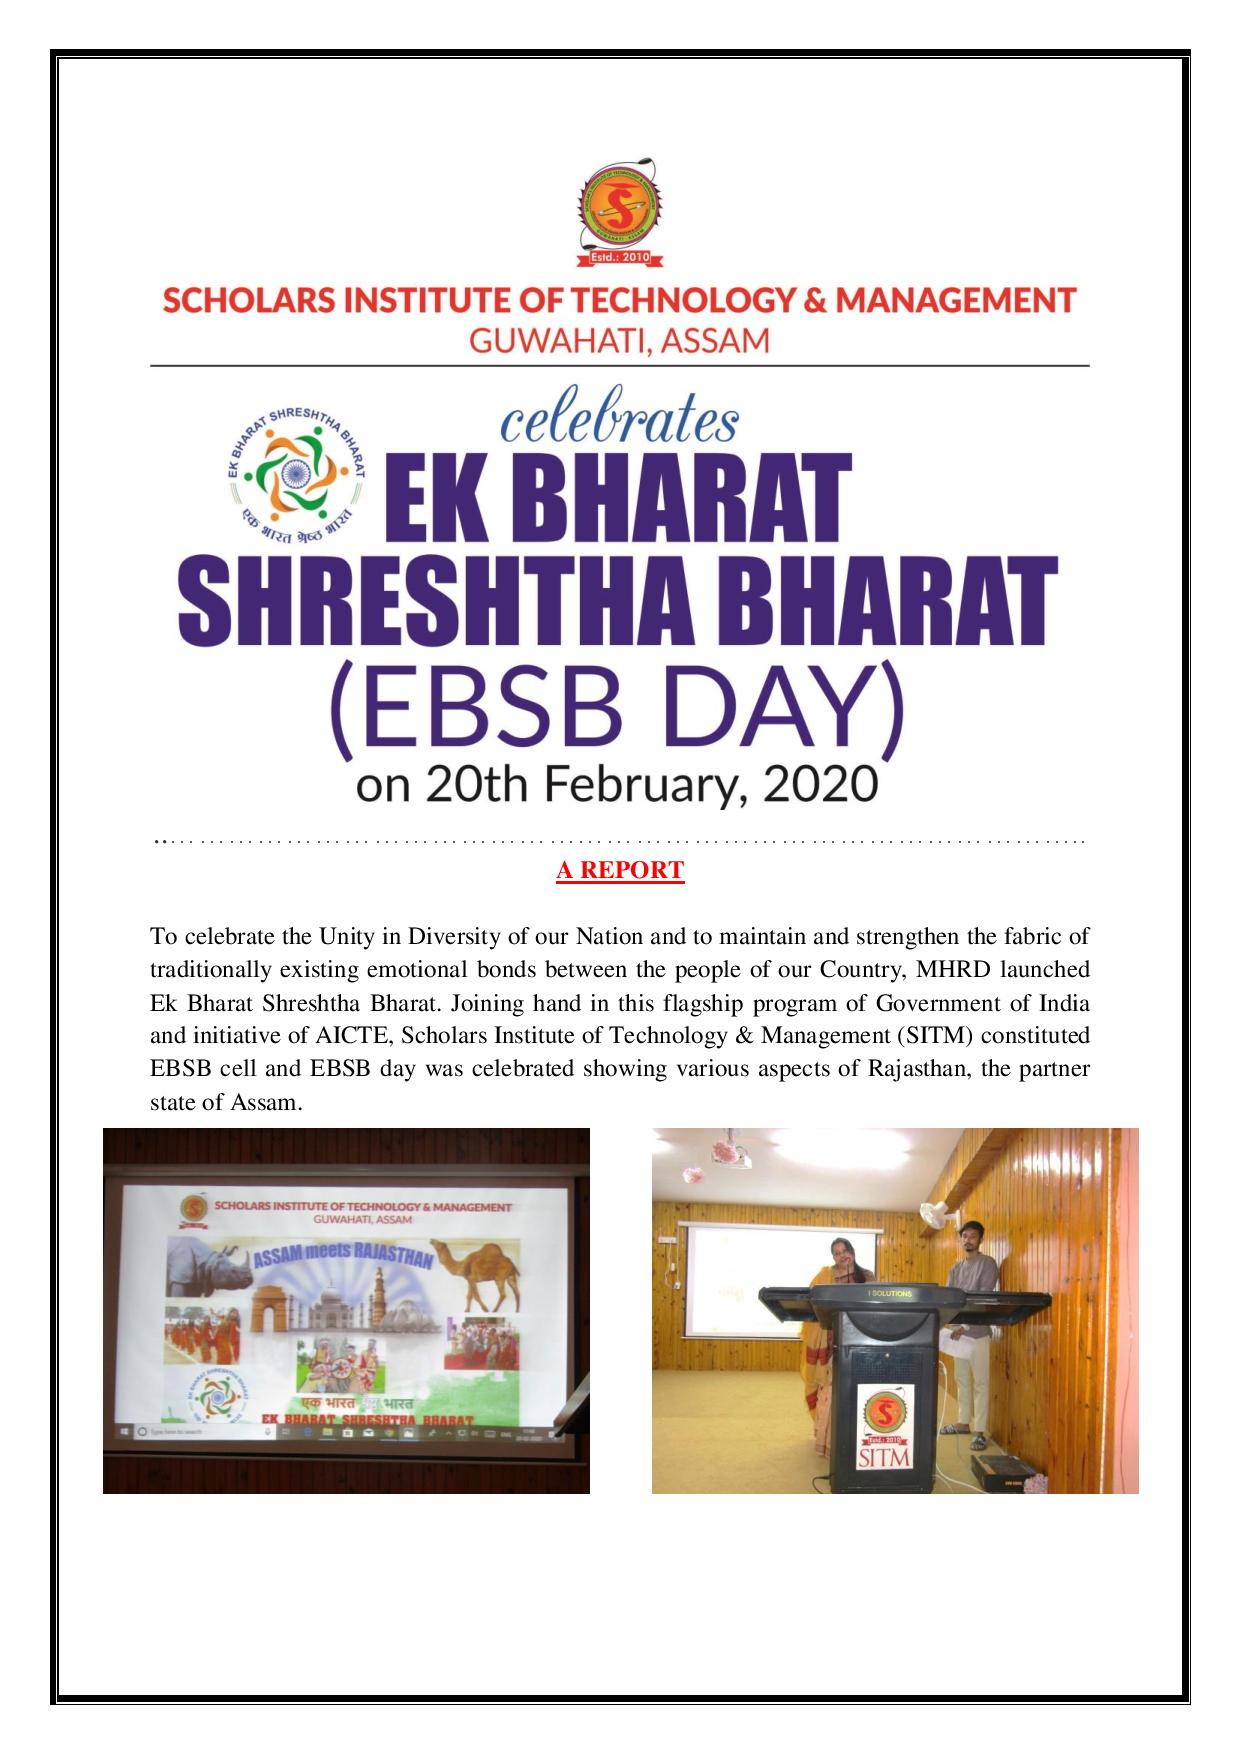 images/gallery/events/Ek Bharat Shreshtha Bharat Day 2020/Report-page-001.jpg